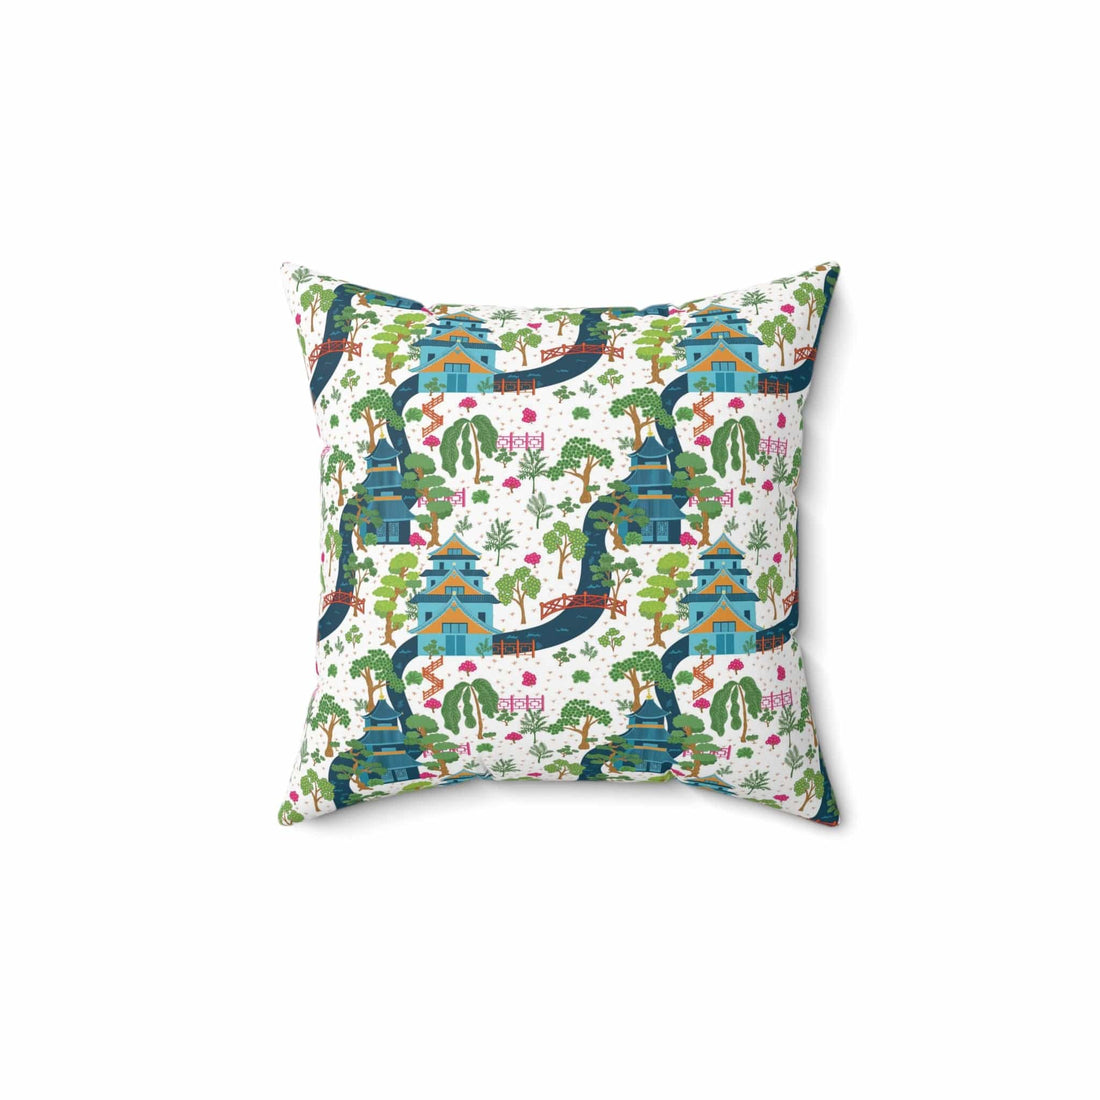 Kate McEnroe New York Chinoiserie Pagoda Garden Pillow with Insert, Oriental Scenic Cushion, Asian - Inspired Throw Pillow KM13819925Throw Pillows27876798841323287249